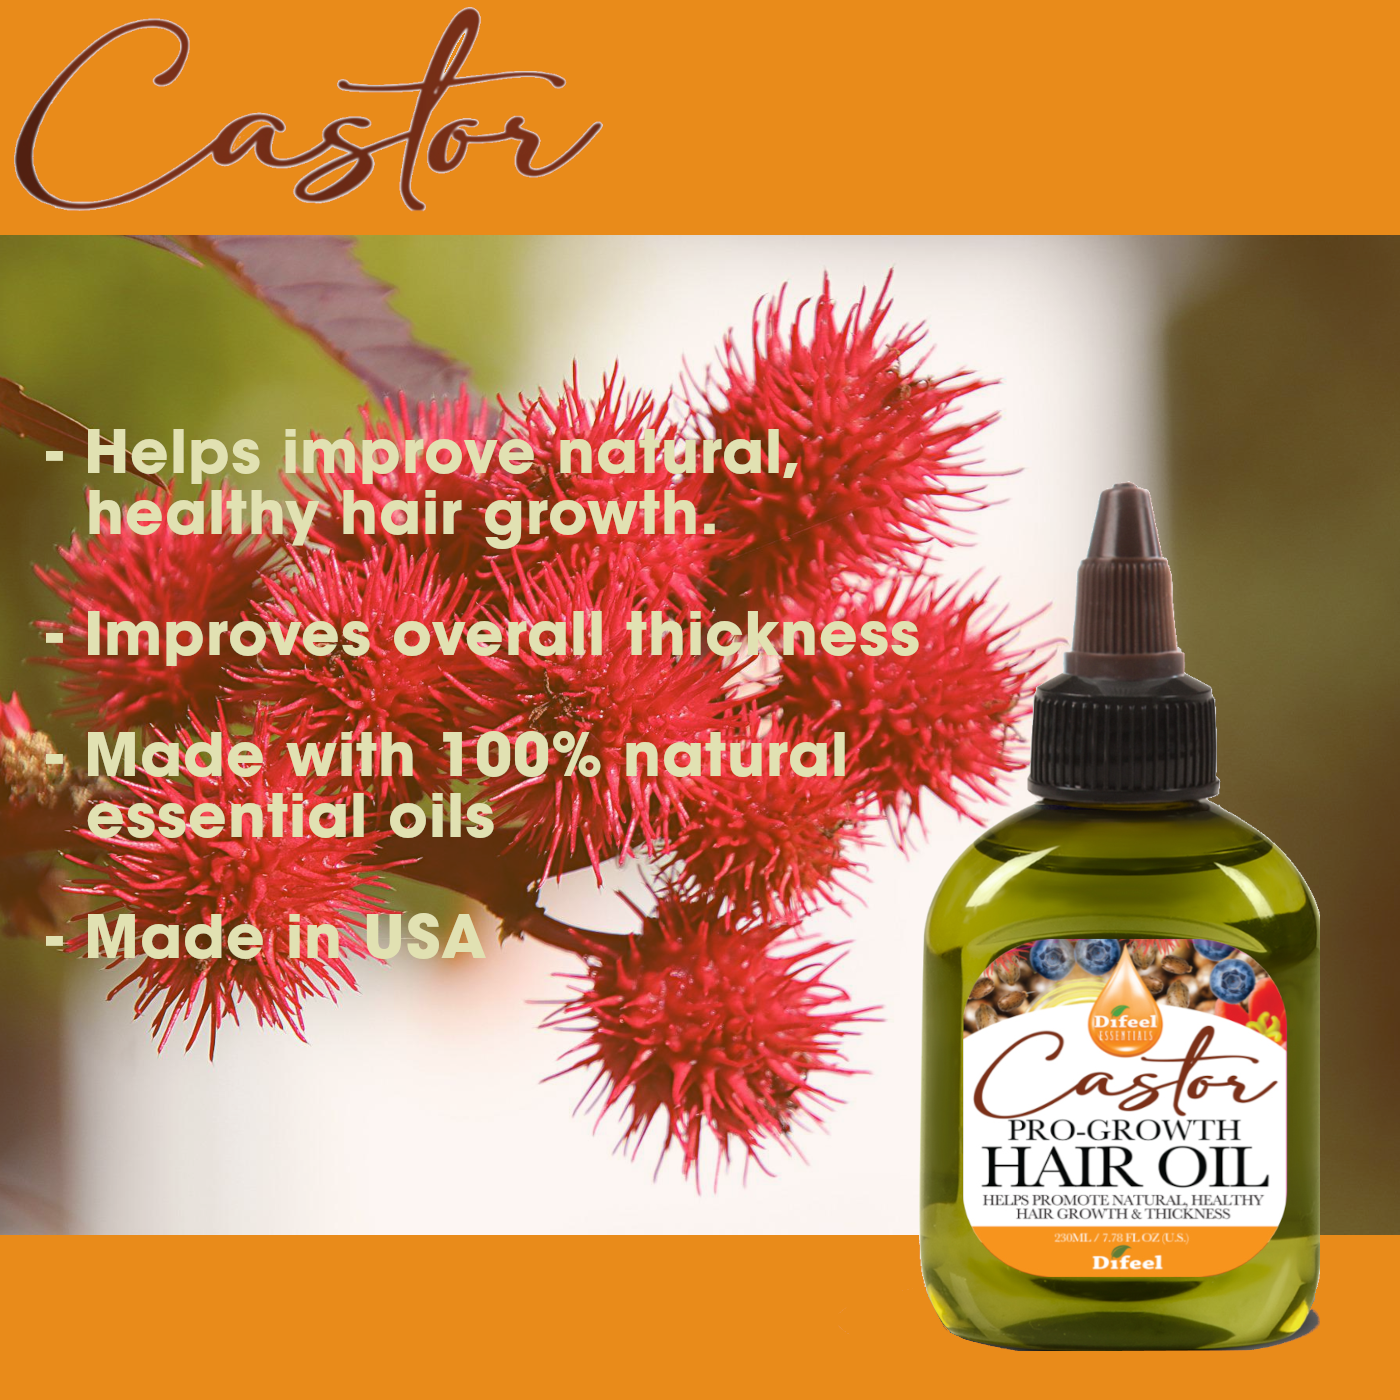 Difeel Essentials Castor Pro-Growth - Hair Oil 2.5 oz.